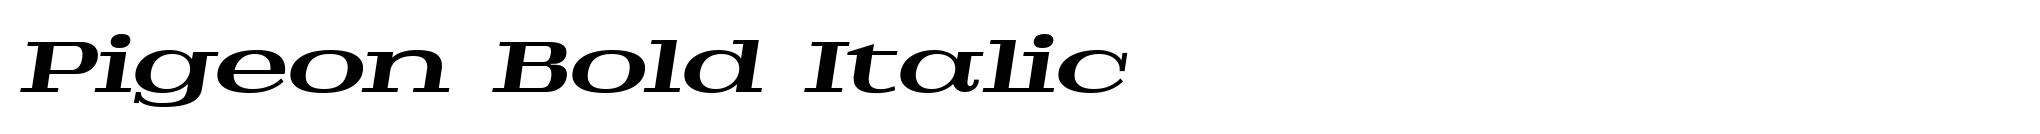 Pigeon Bold Italic image